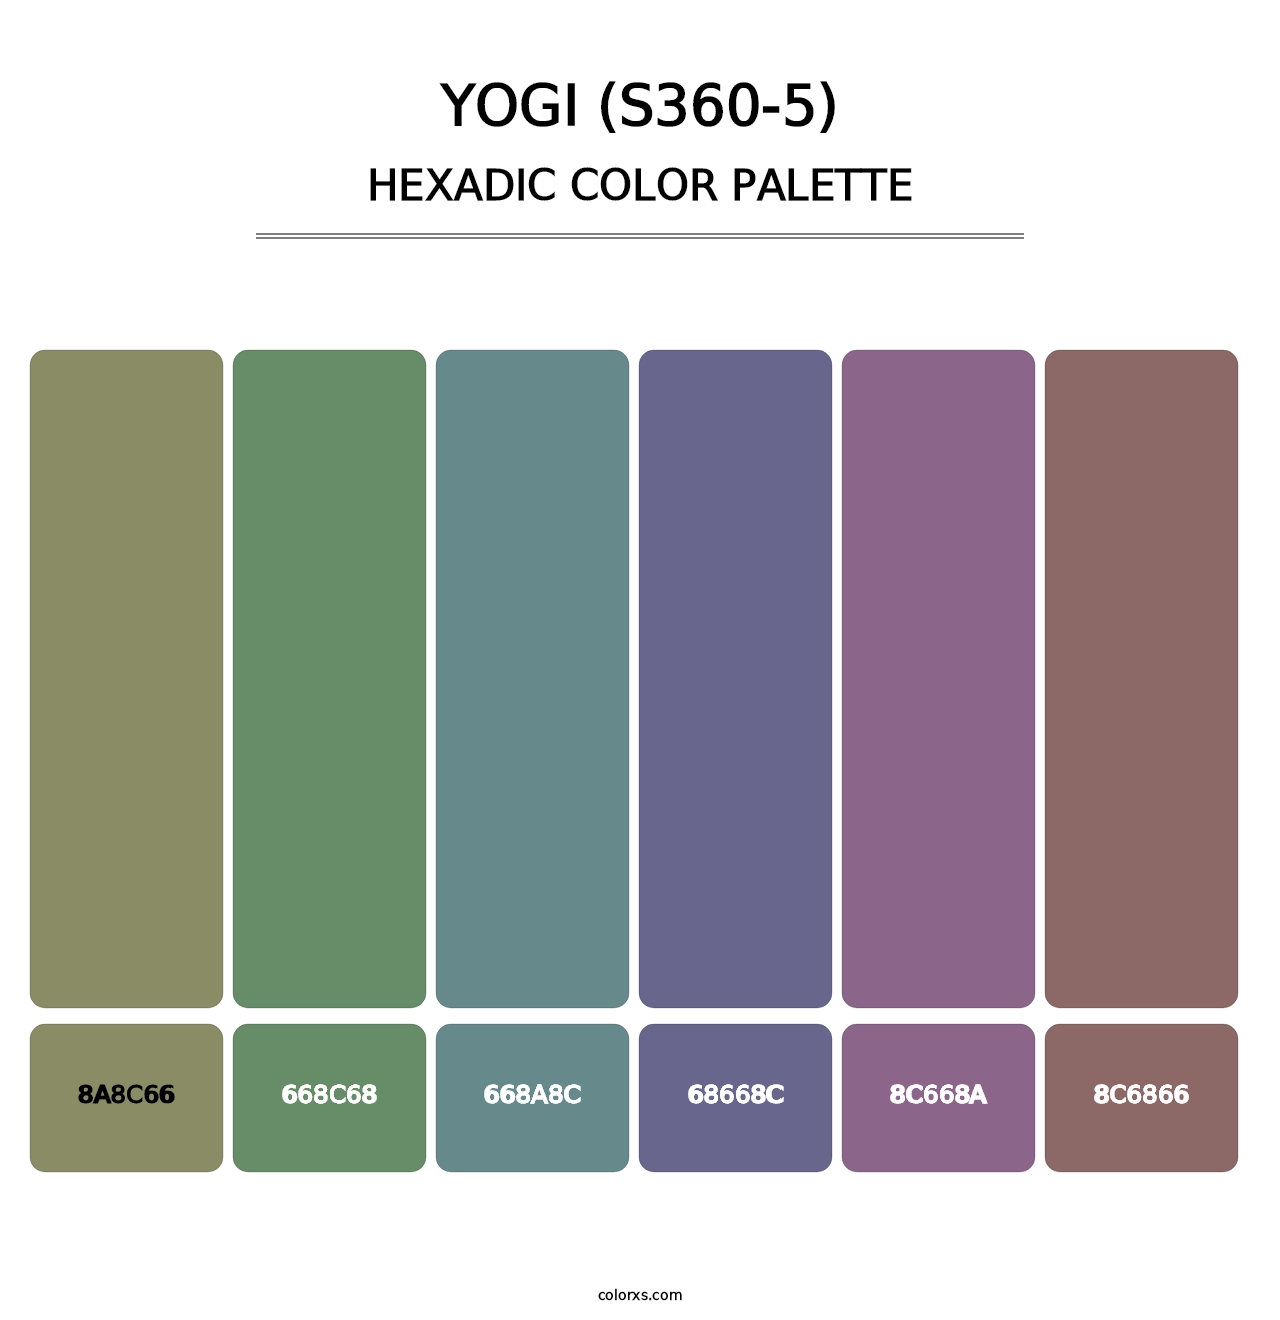 Yogi (S360-5) - Hexadic Color Palette